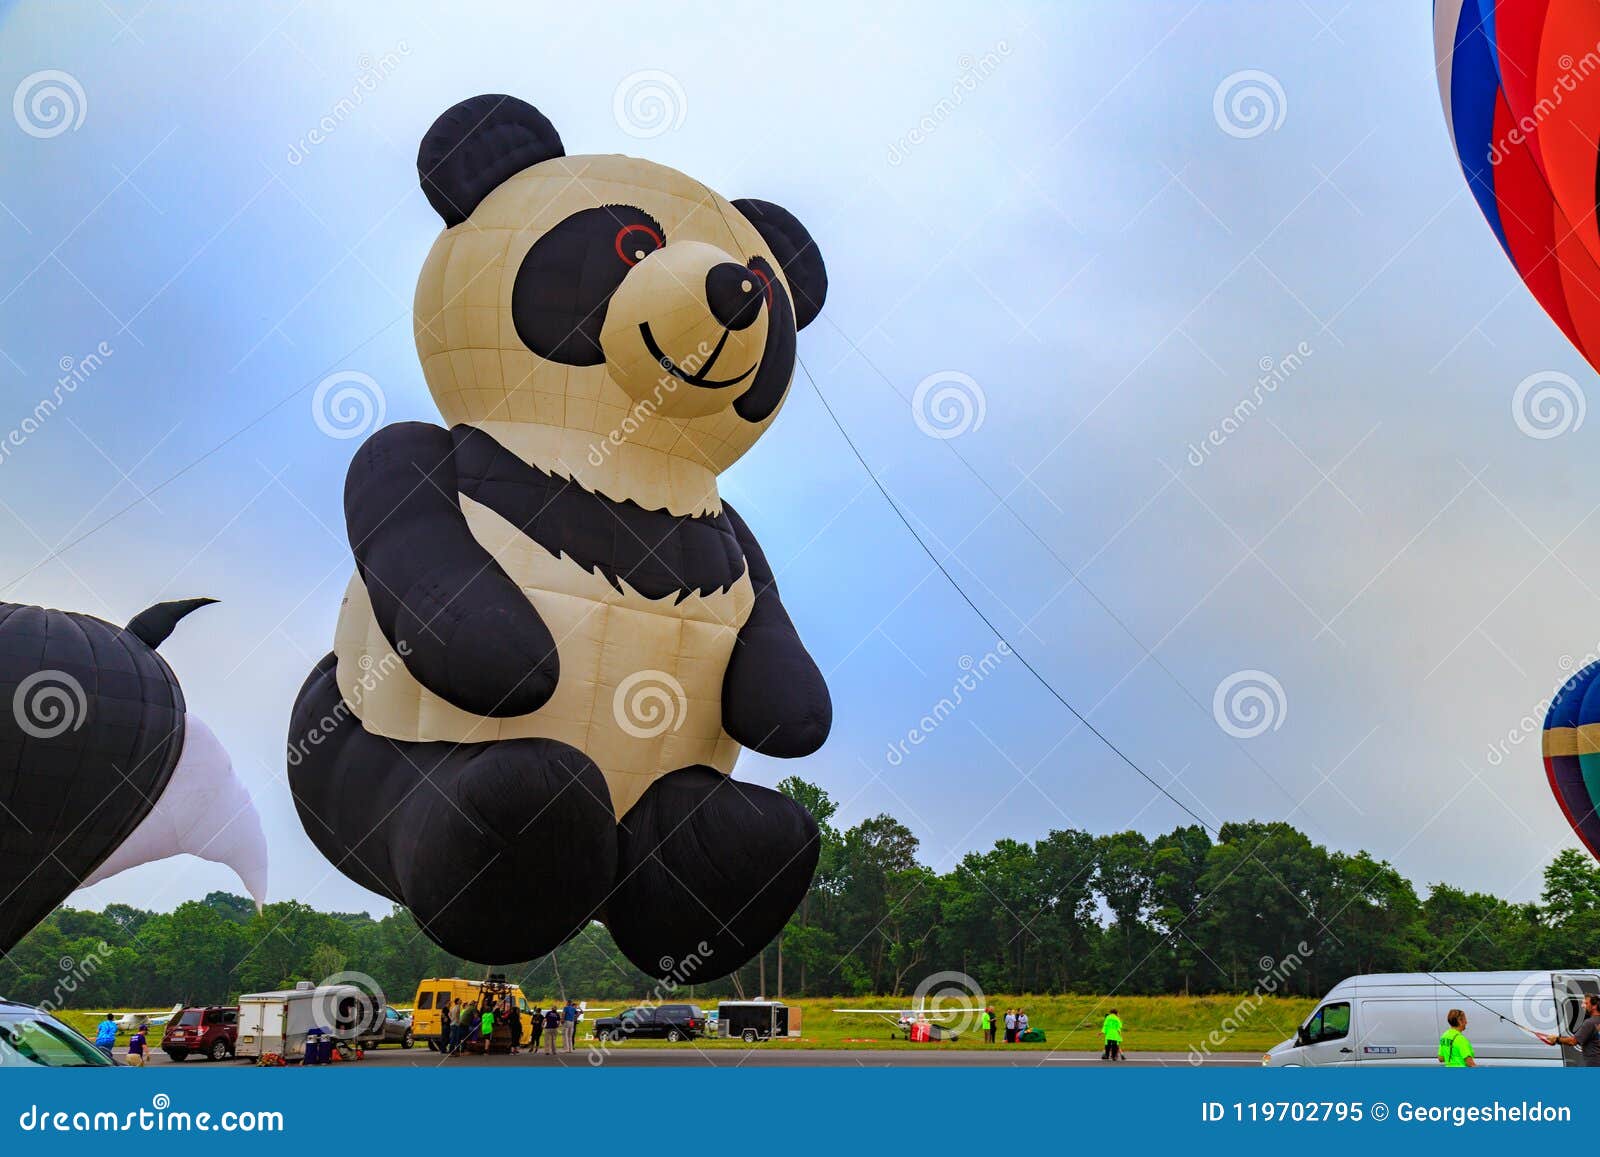 The Hot Air Panda Balloon Editorial Image Image Of Sport 119702795